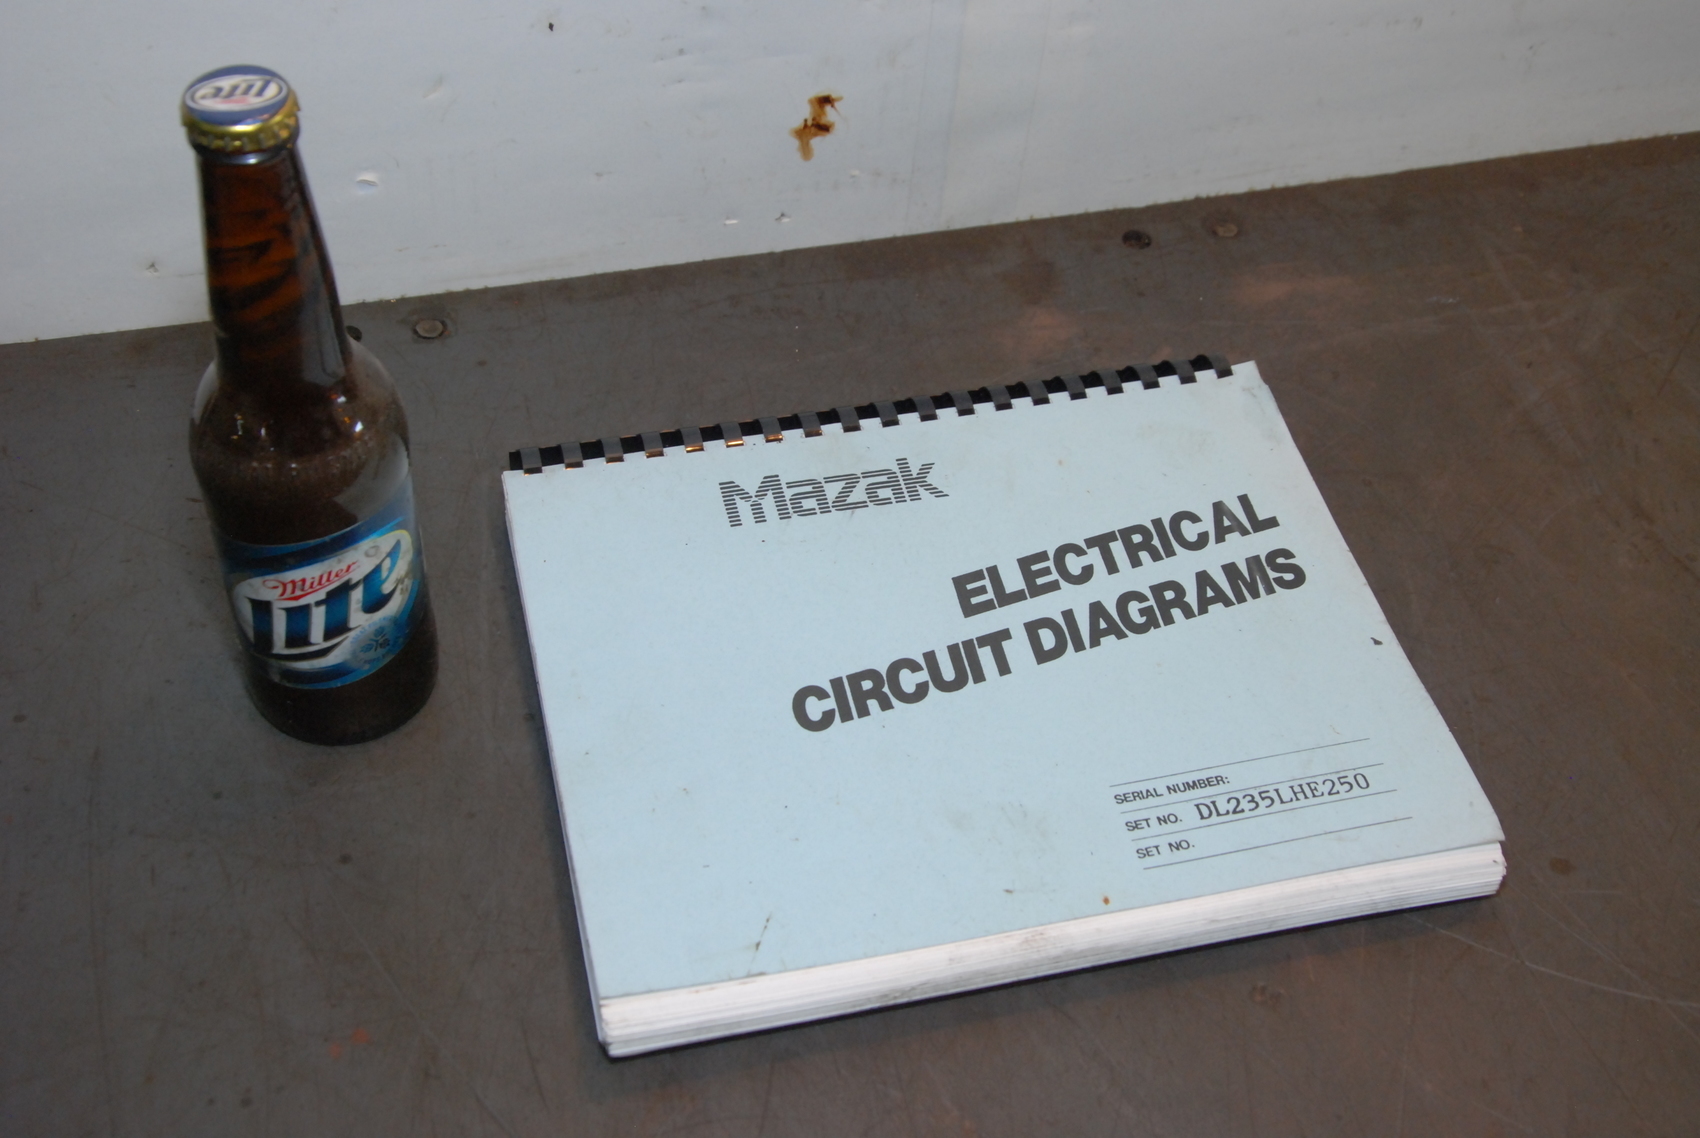 Mazak Electrical Circuit Diagrams,Set:DL235LHE250